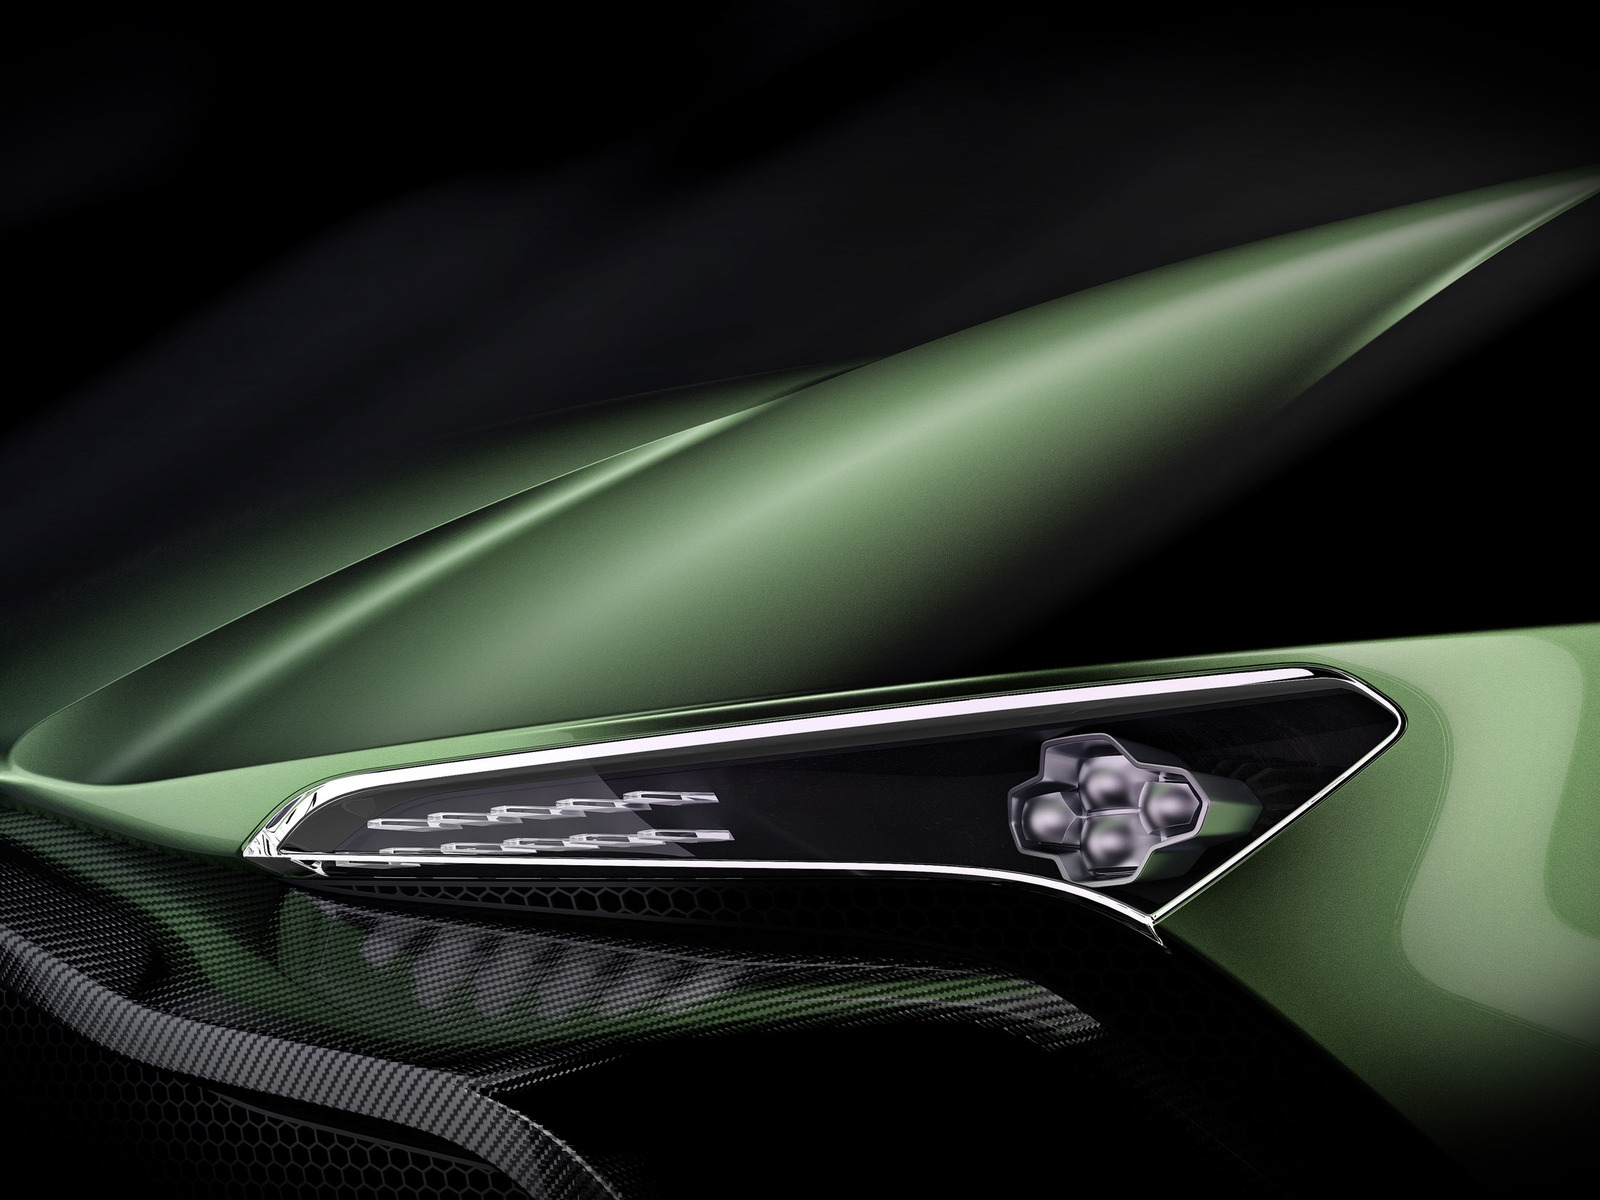 Aston Martin Vulcan Headlight for 1600 x 1200 resolution